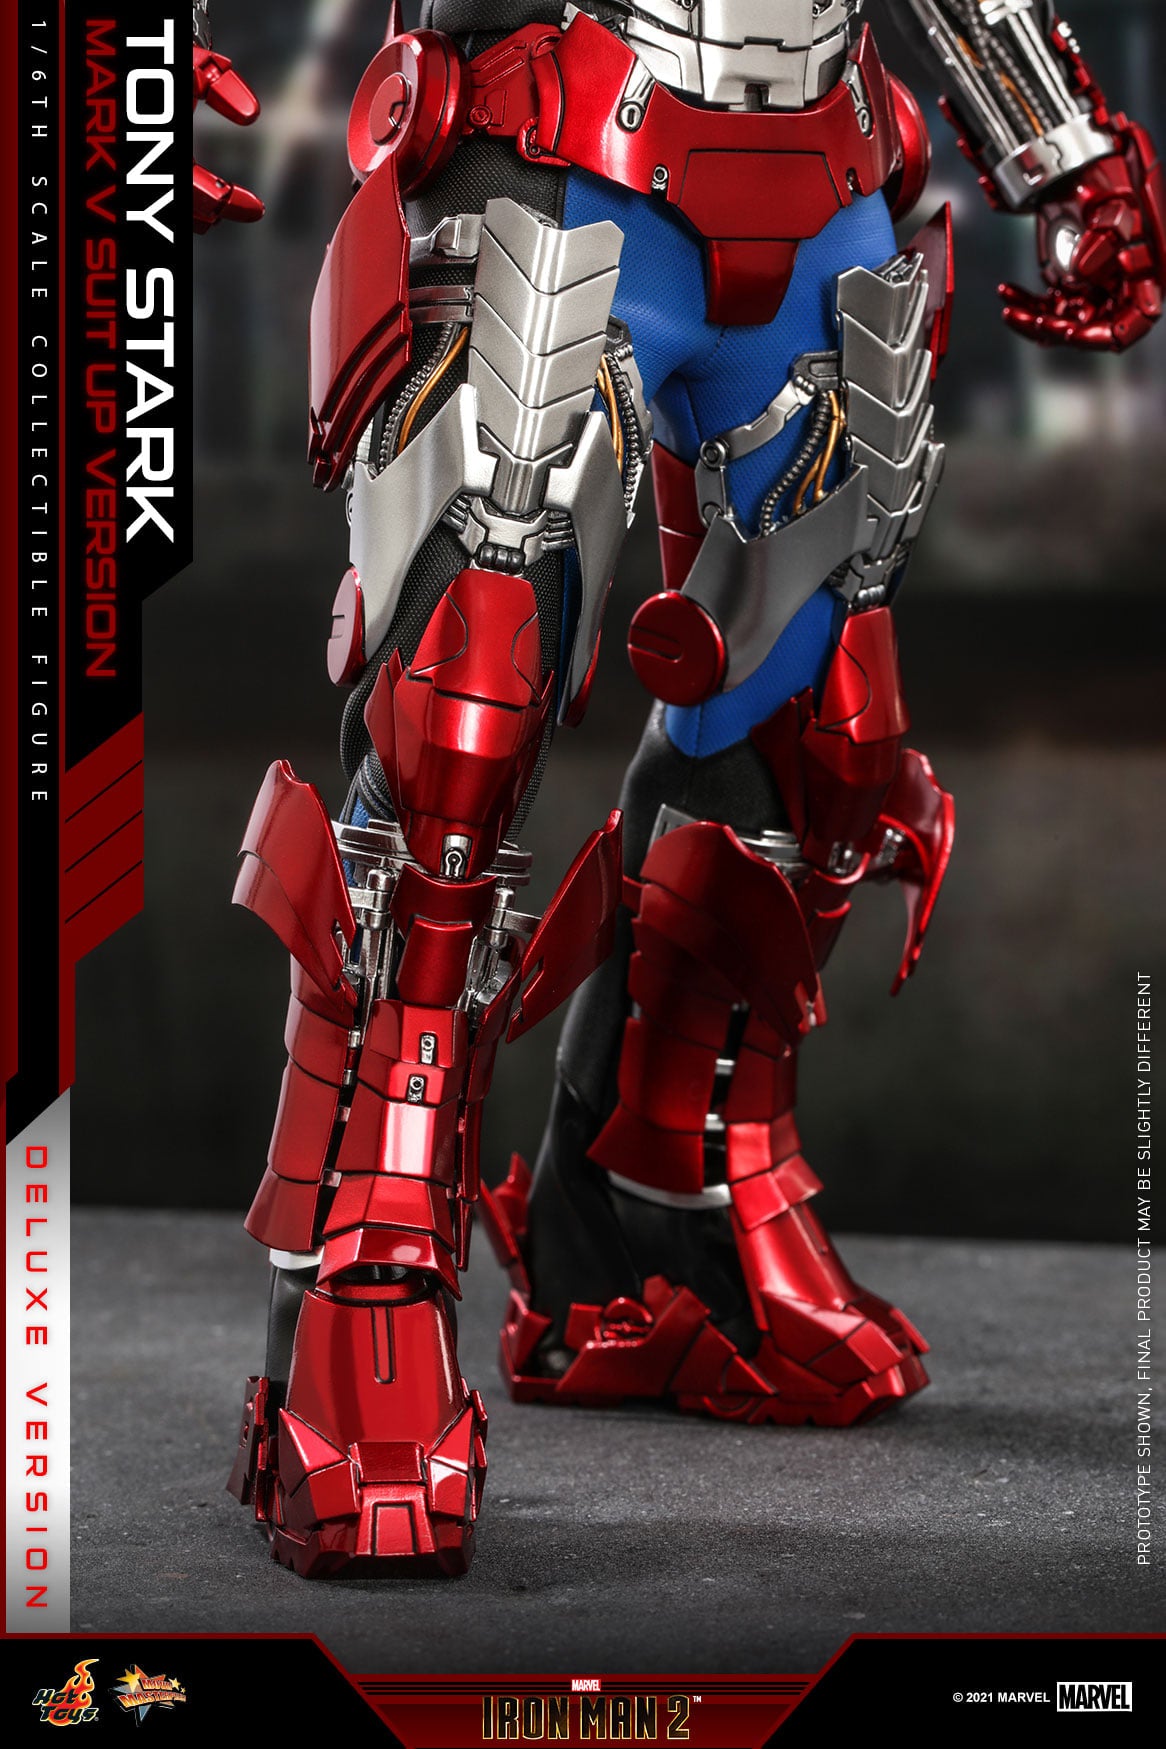 Hot Toys MMS600 1/6 Iron Man 2 - Tony Stark Mark V Suit up Version (Deluxe Version)